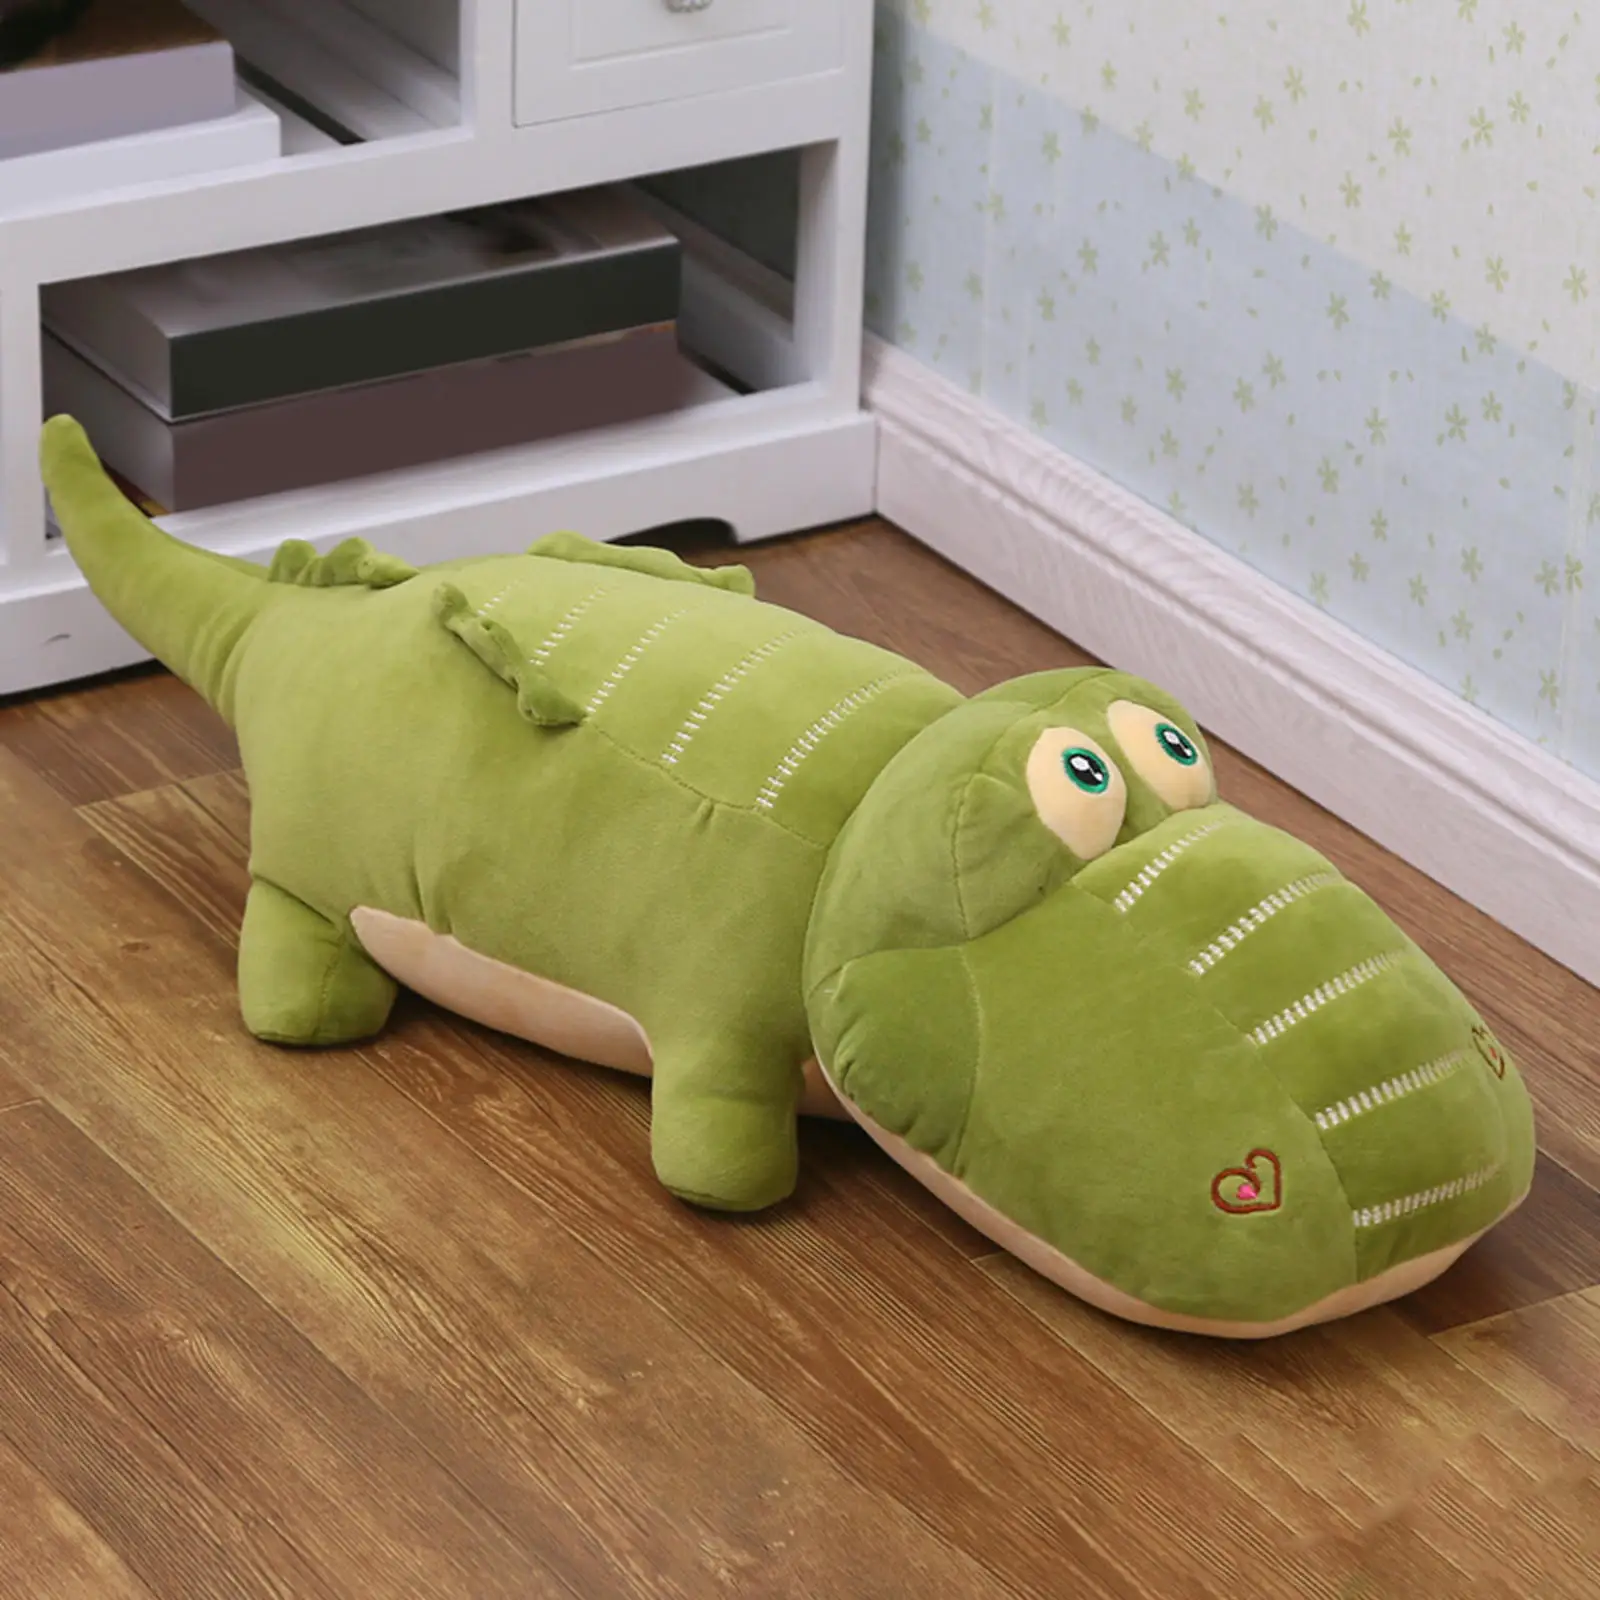 Lovely Plush Alligator Doll Stuffed Animal Soft Toy Sleeping Pillow for Girls Kids Xmas Gifts